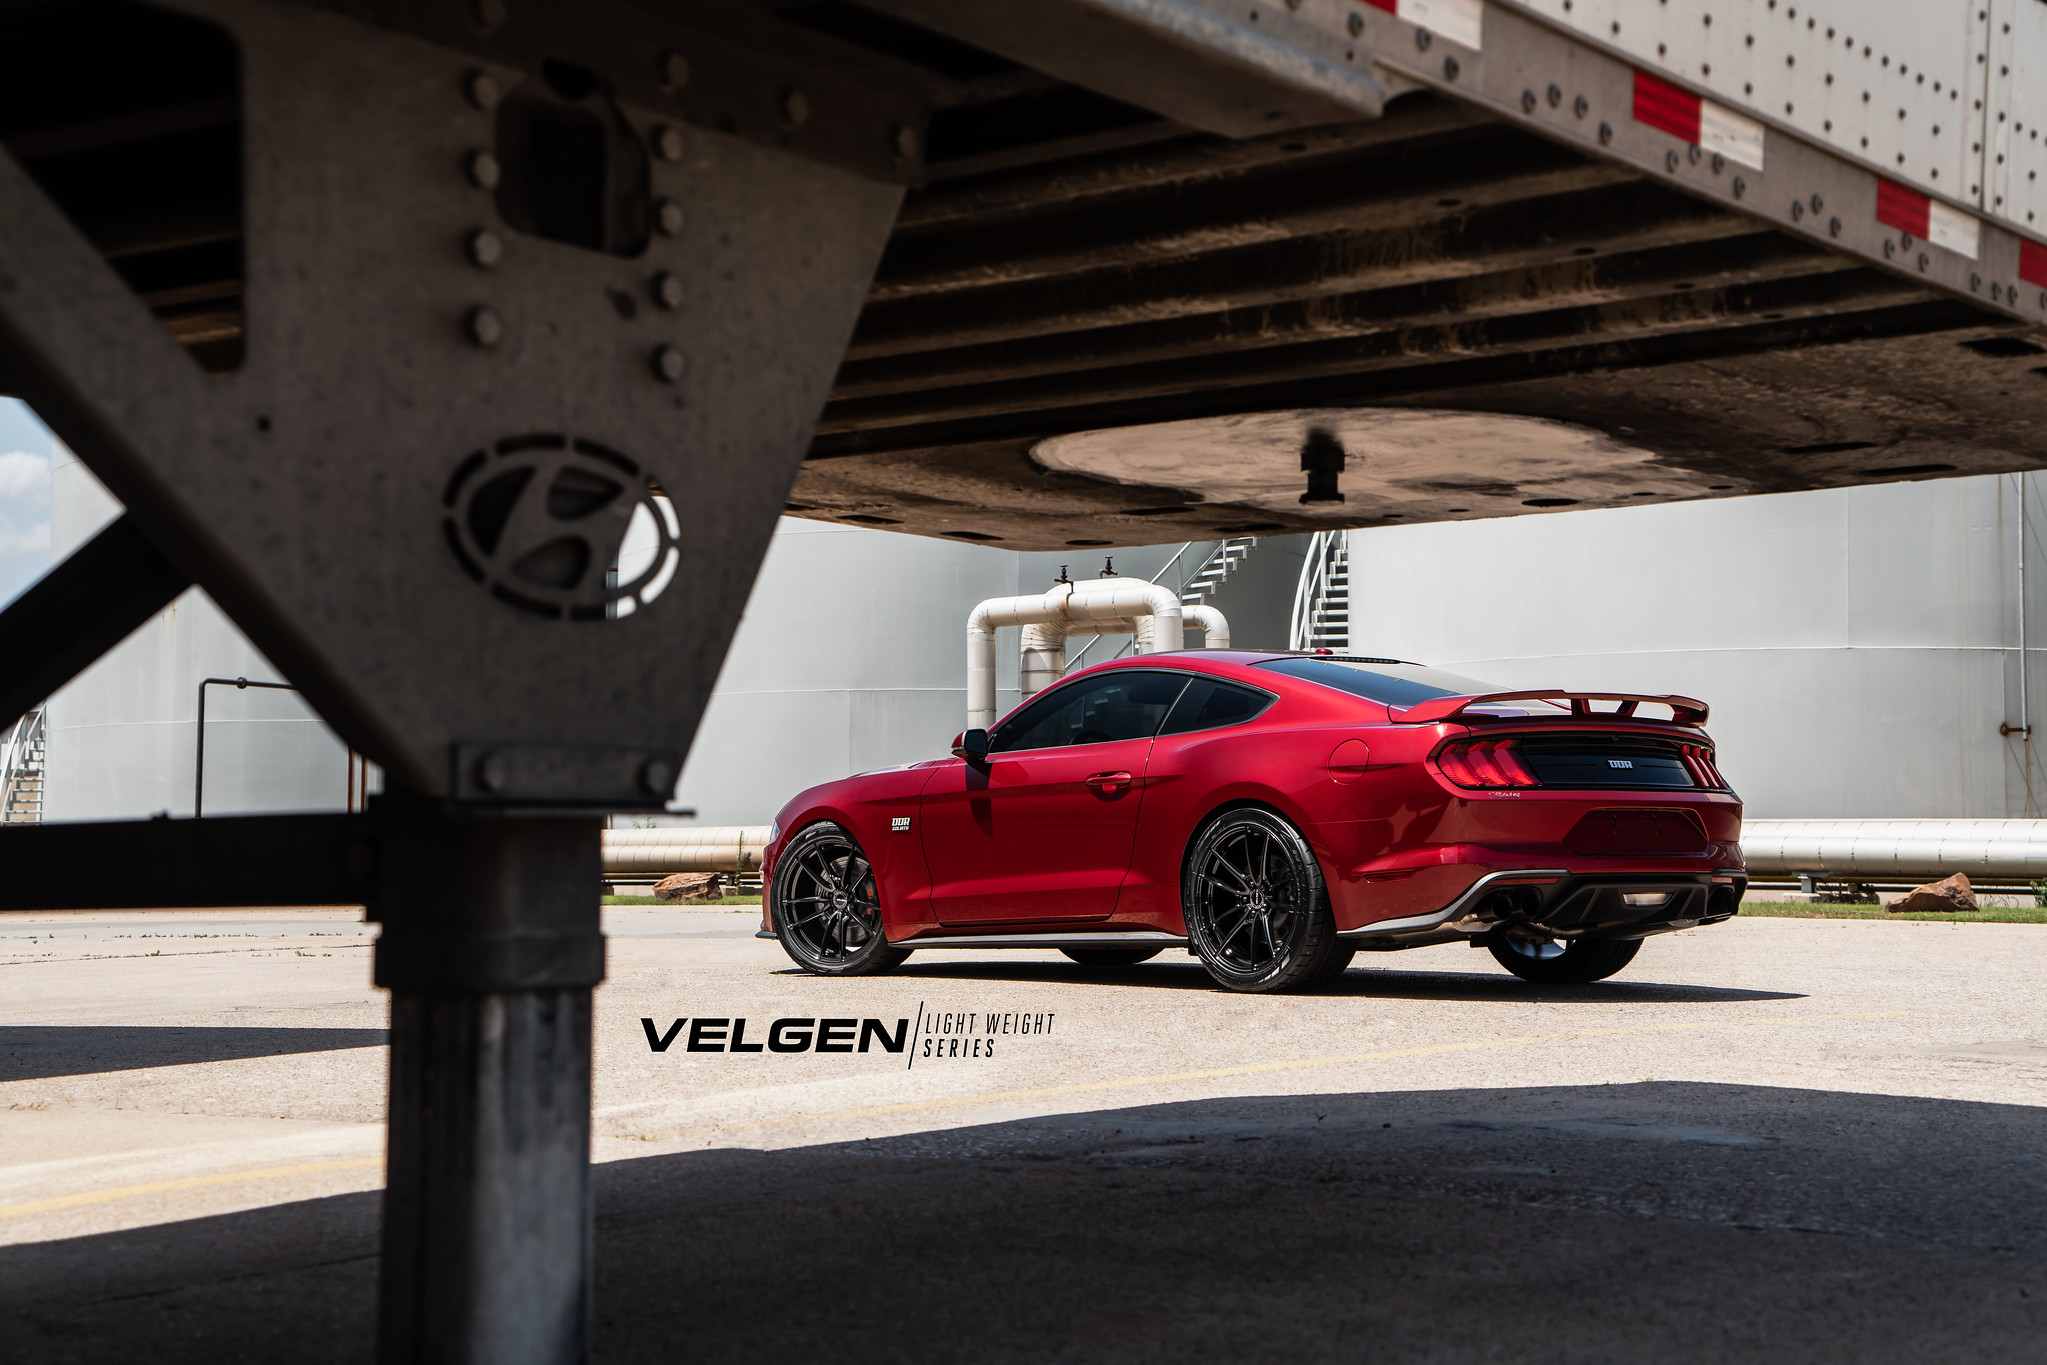 S650 Mustang Velgen wheels for your S650 Mustang | Vibe Motorsports 48233537241_383fec8886_k